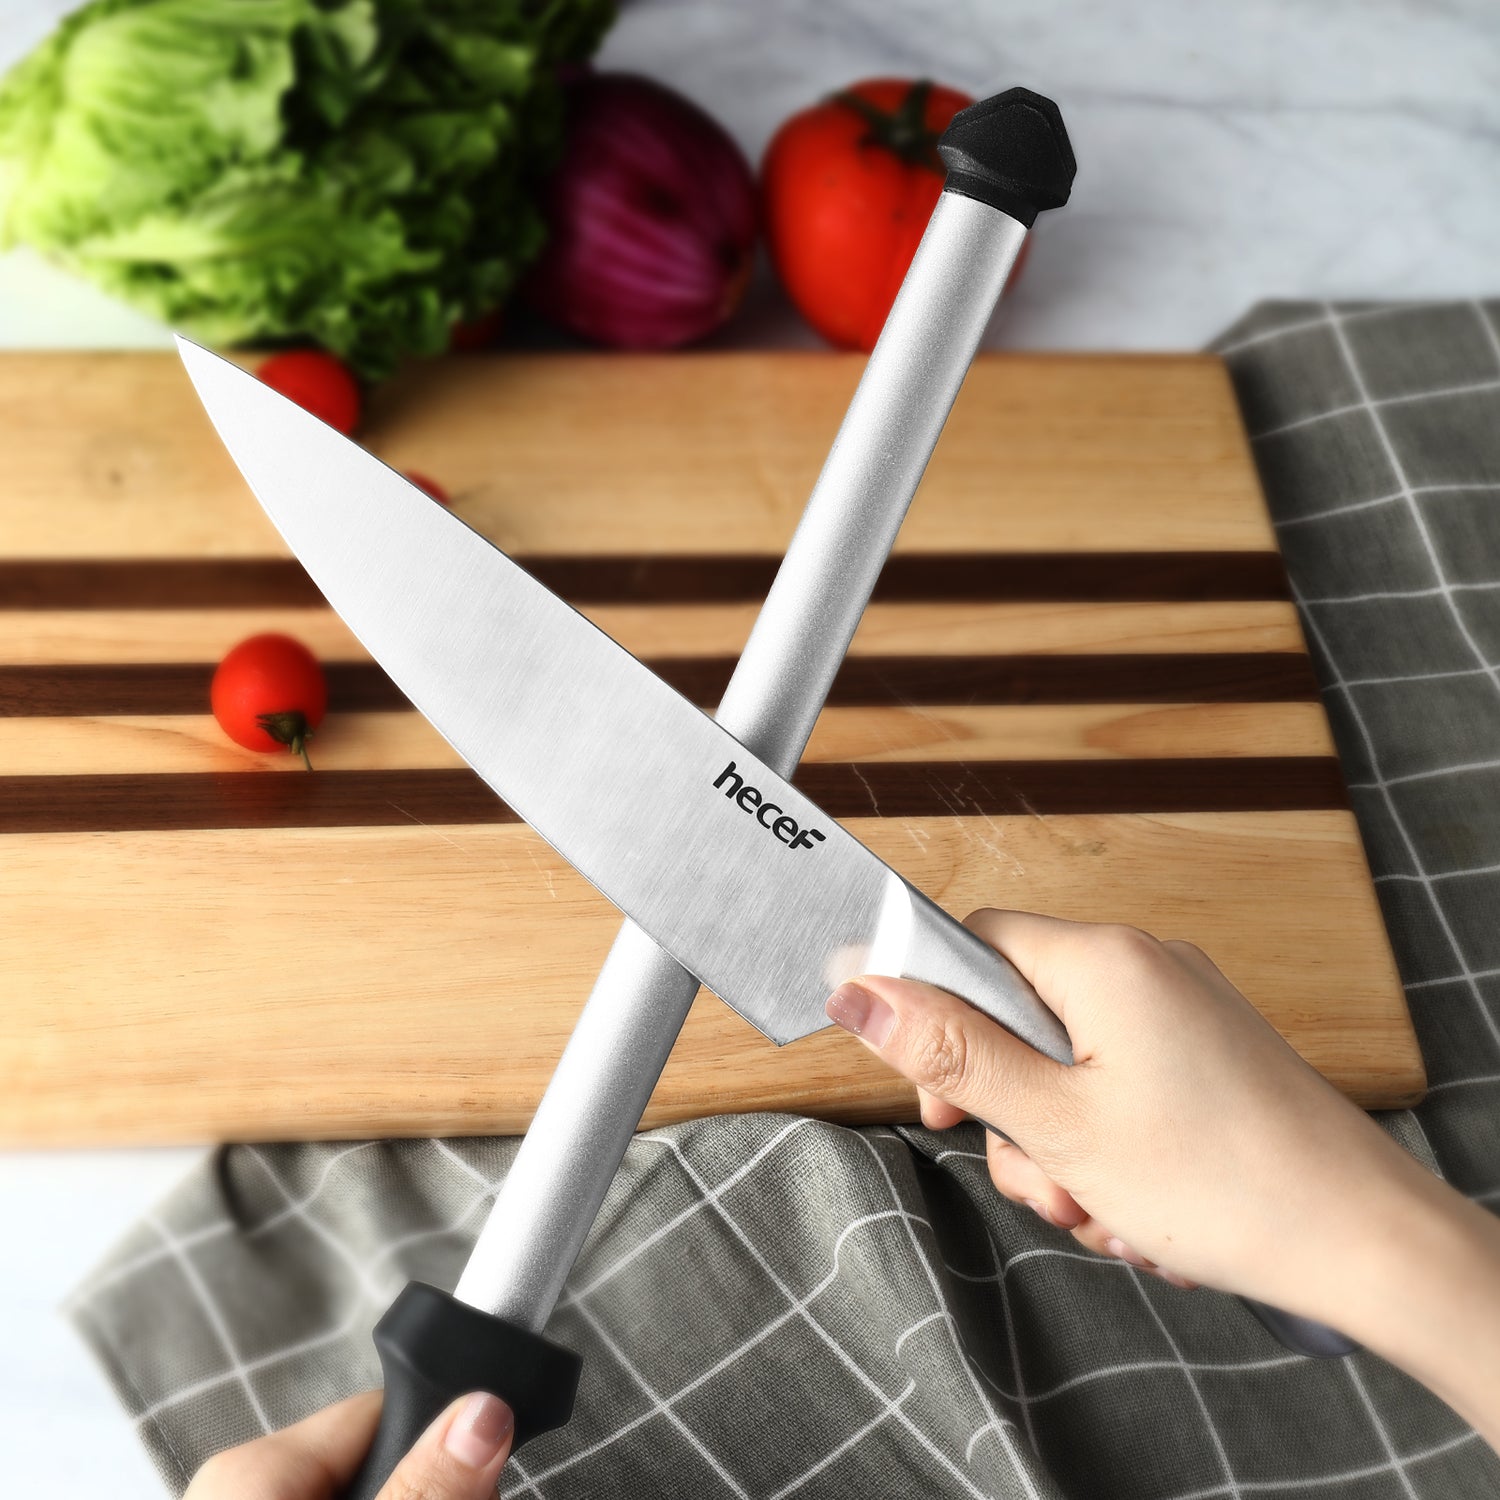 UberSchnitt Carbon Steel 10 Inch Knife Honing Rod + Knife Guard